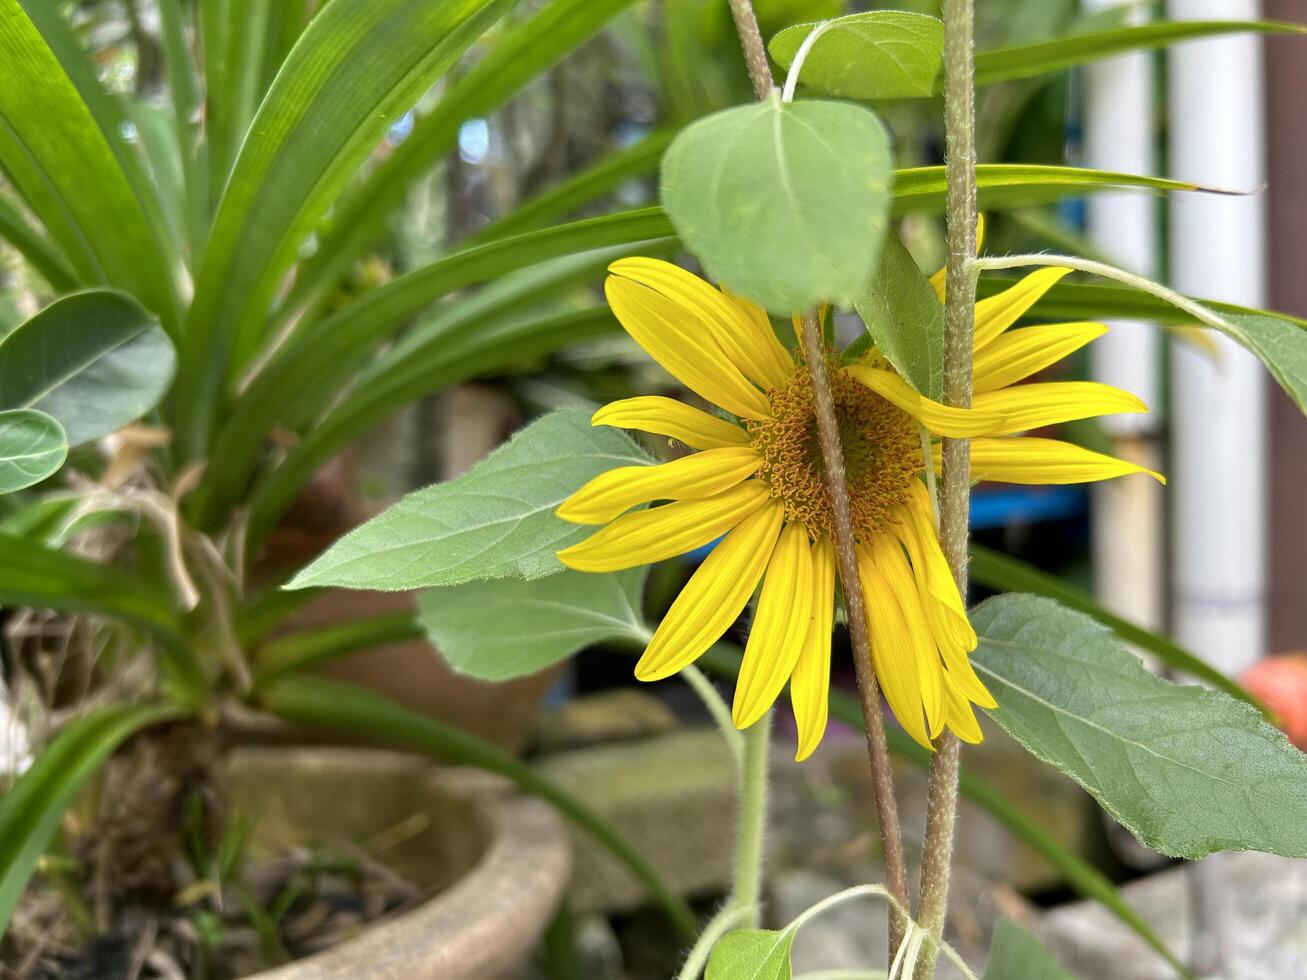 Garden Sunflower Close Up View photo